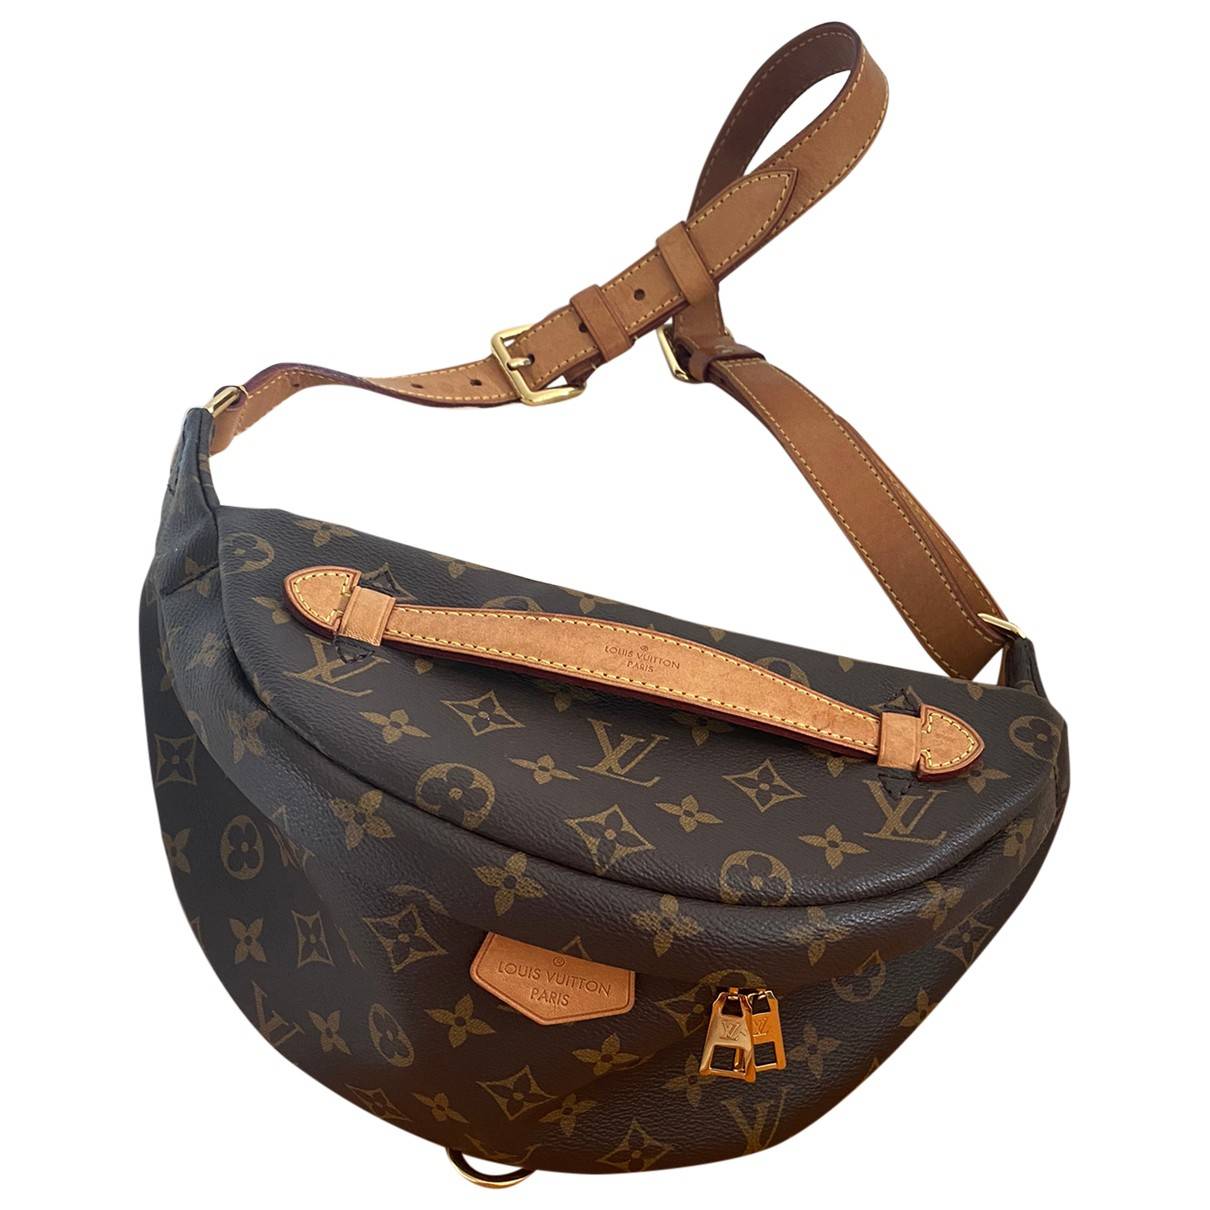 Bum bag / sac ceinture leather crossbody bag Louis Vuitton Brown in Leather  - 34838455